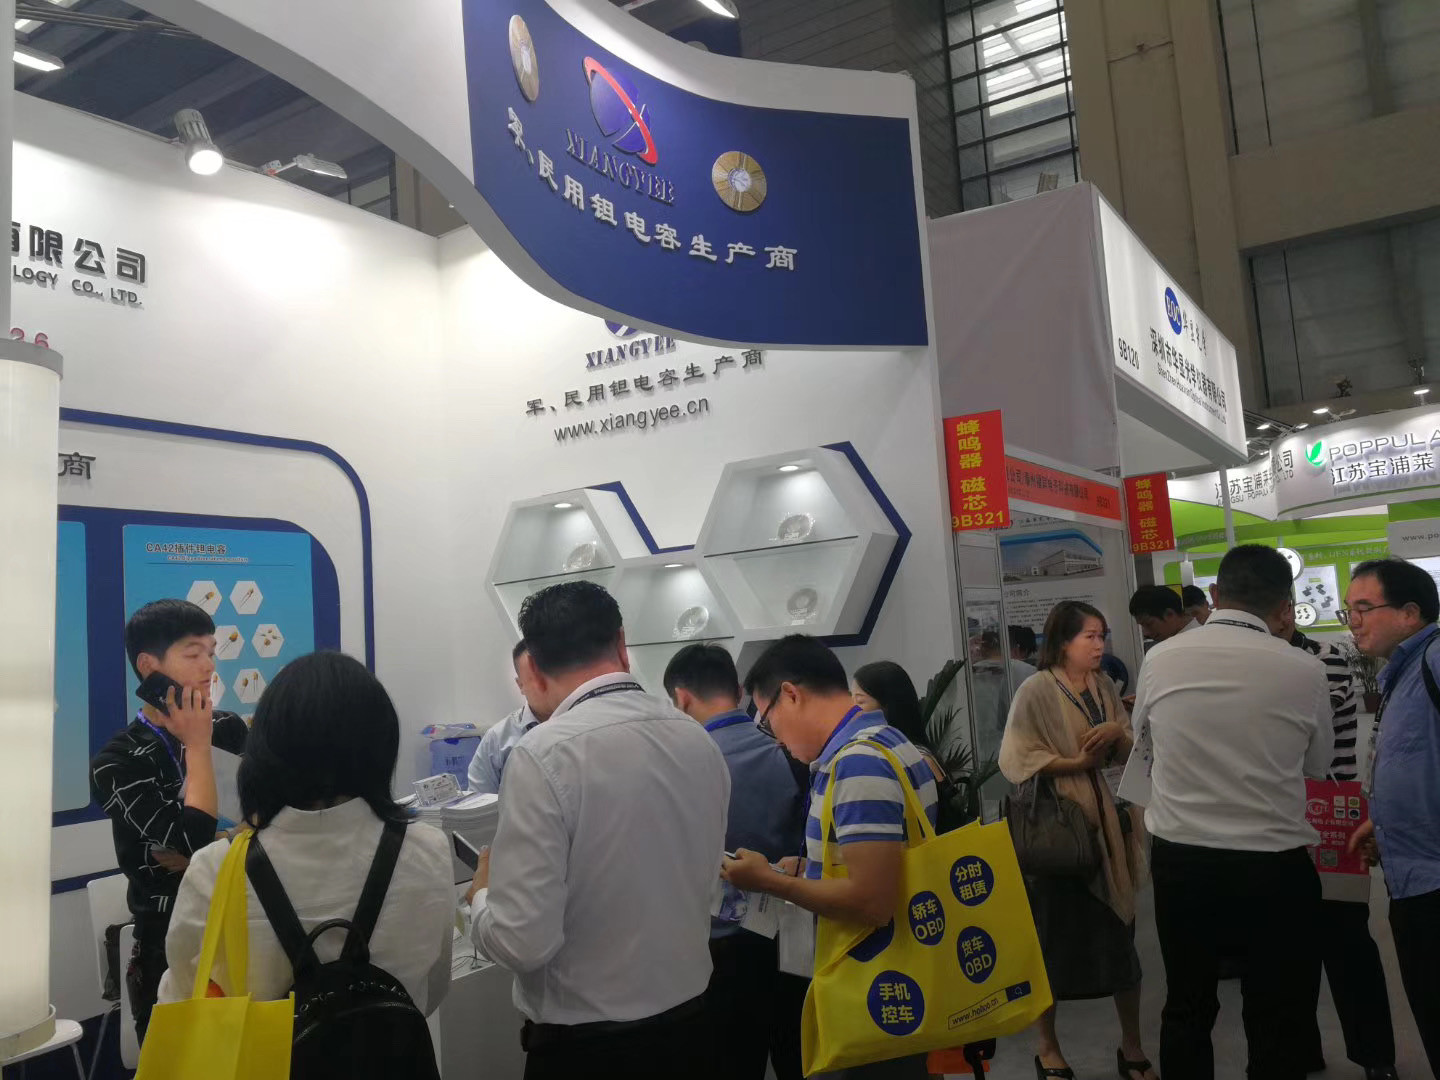 Shenzhen International Electronics Fair April 2019